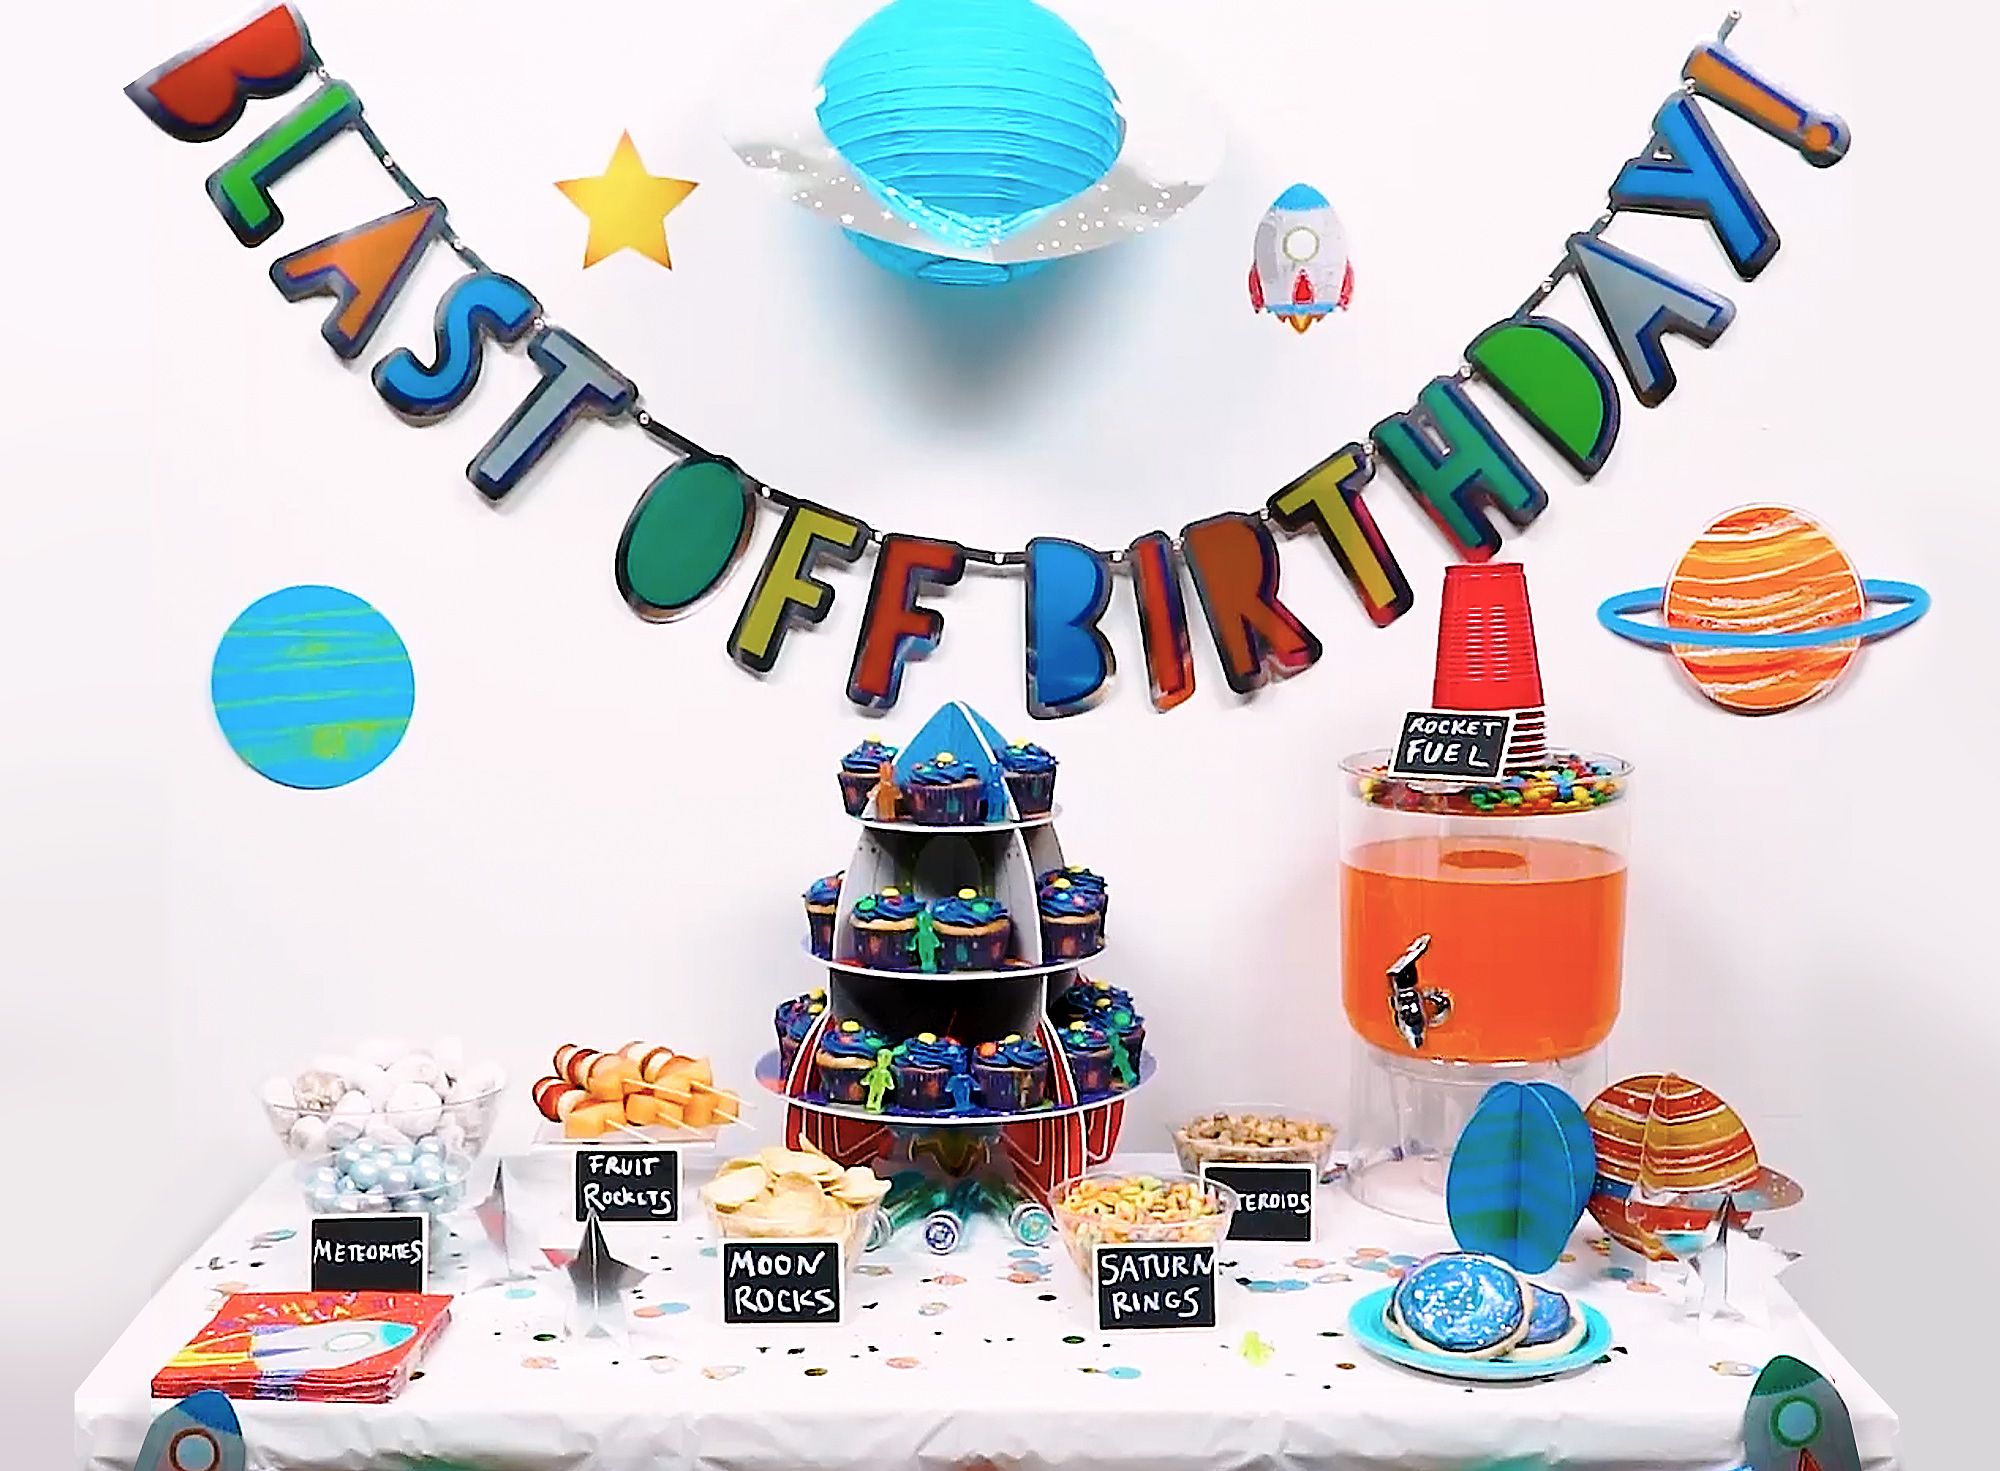 Boys Birthday Party Ideas Party City - roblox birthday party sign in 2019 7th birthday party